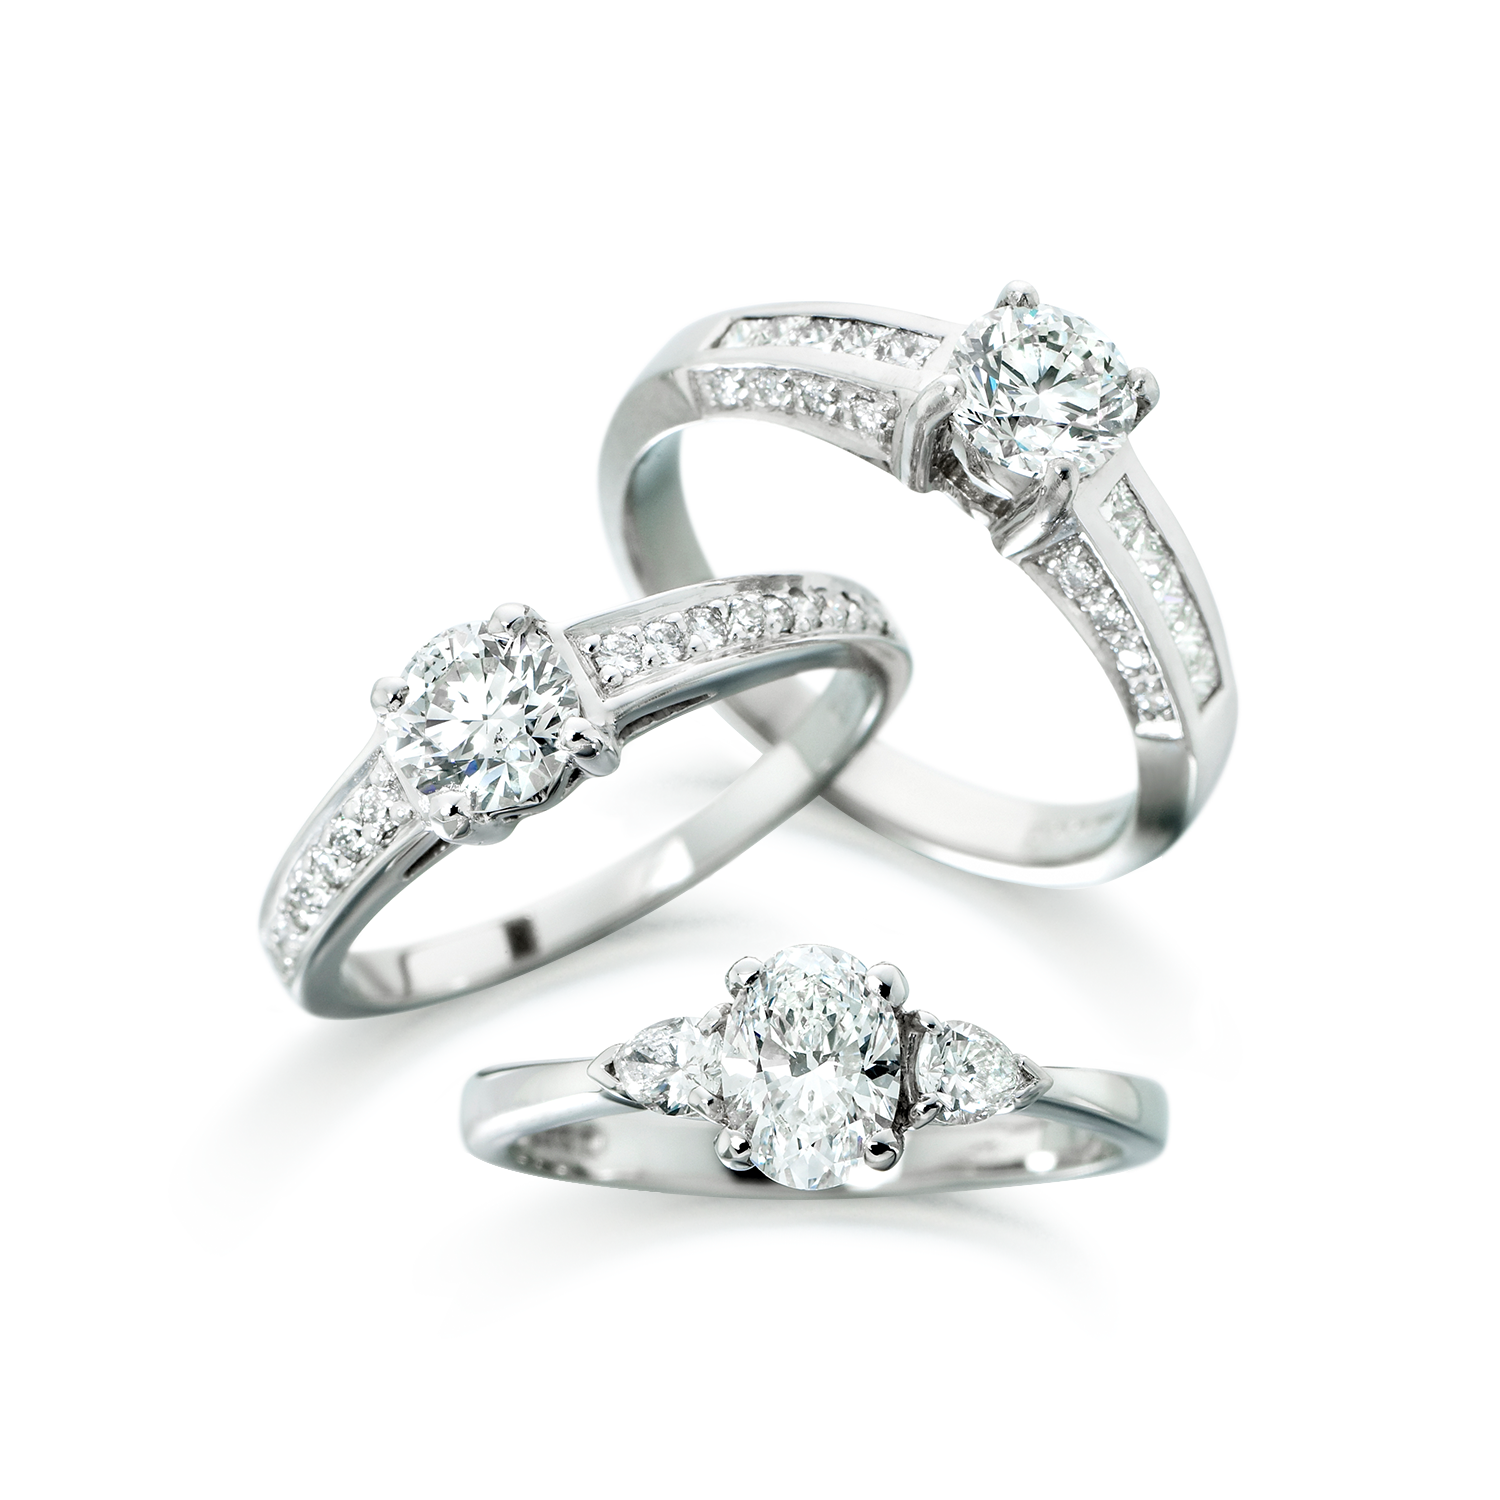 Fancy diamond set engagement rings